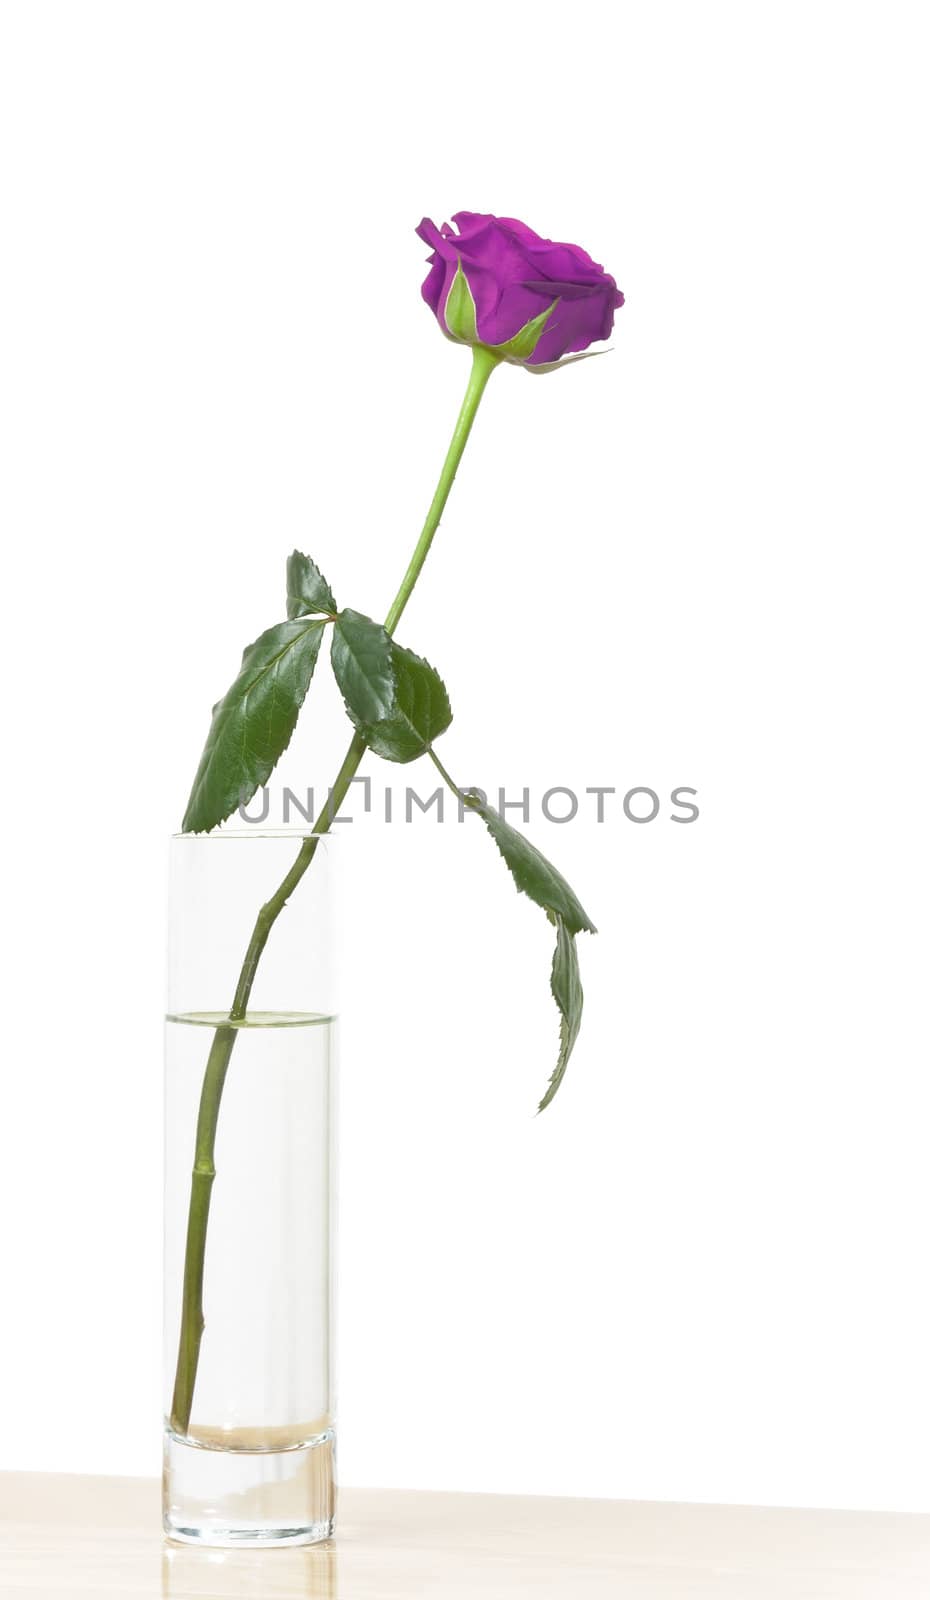 An image of a nice purple rose